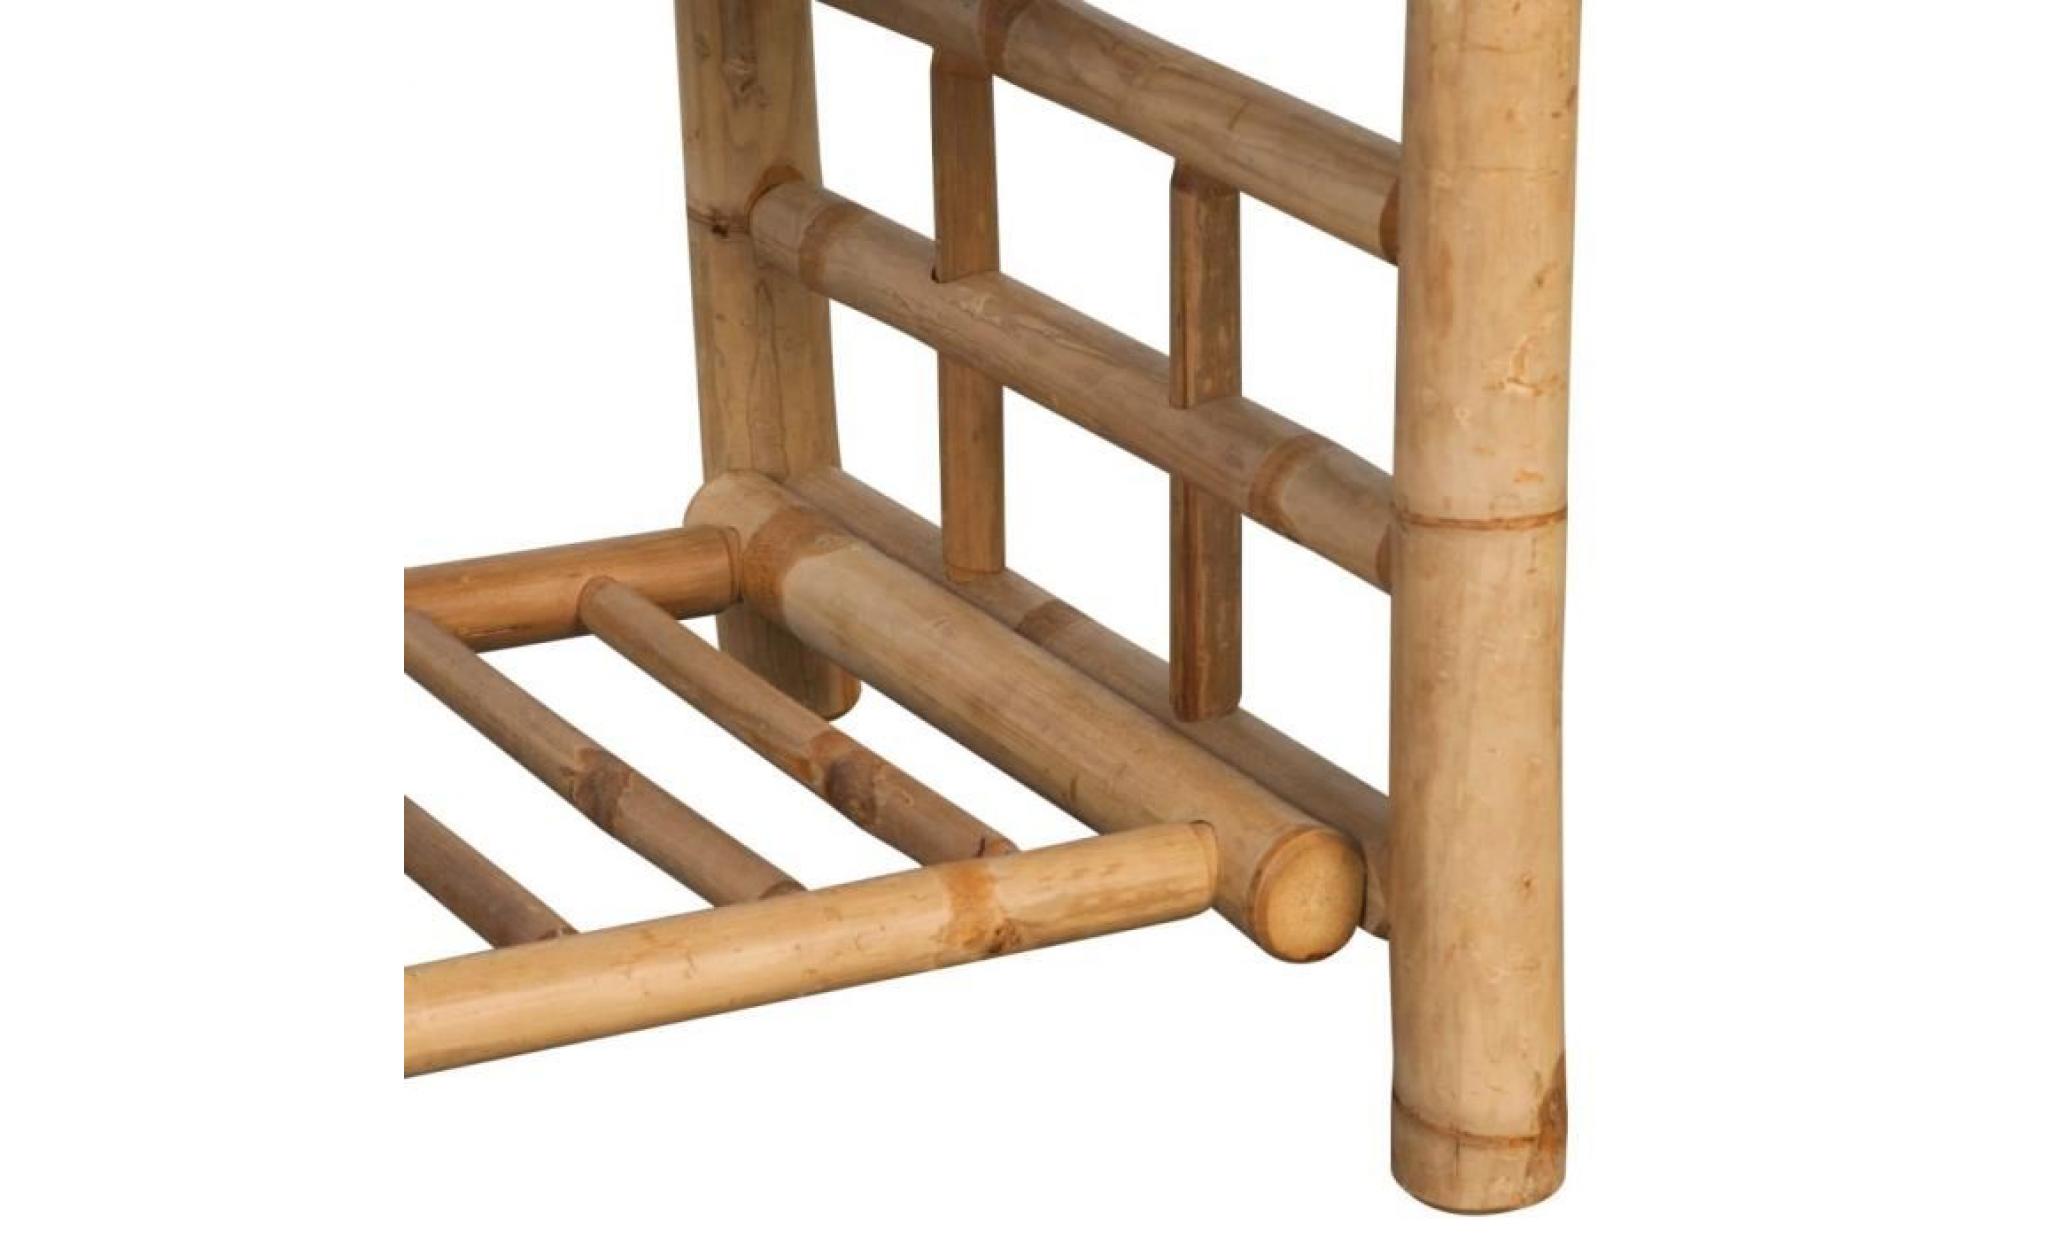 table basse bambou 90 x 50 x 45 cm brun pas cher